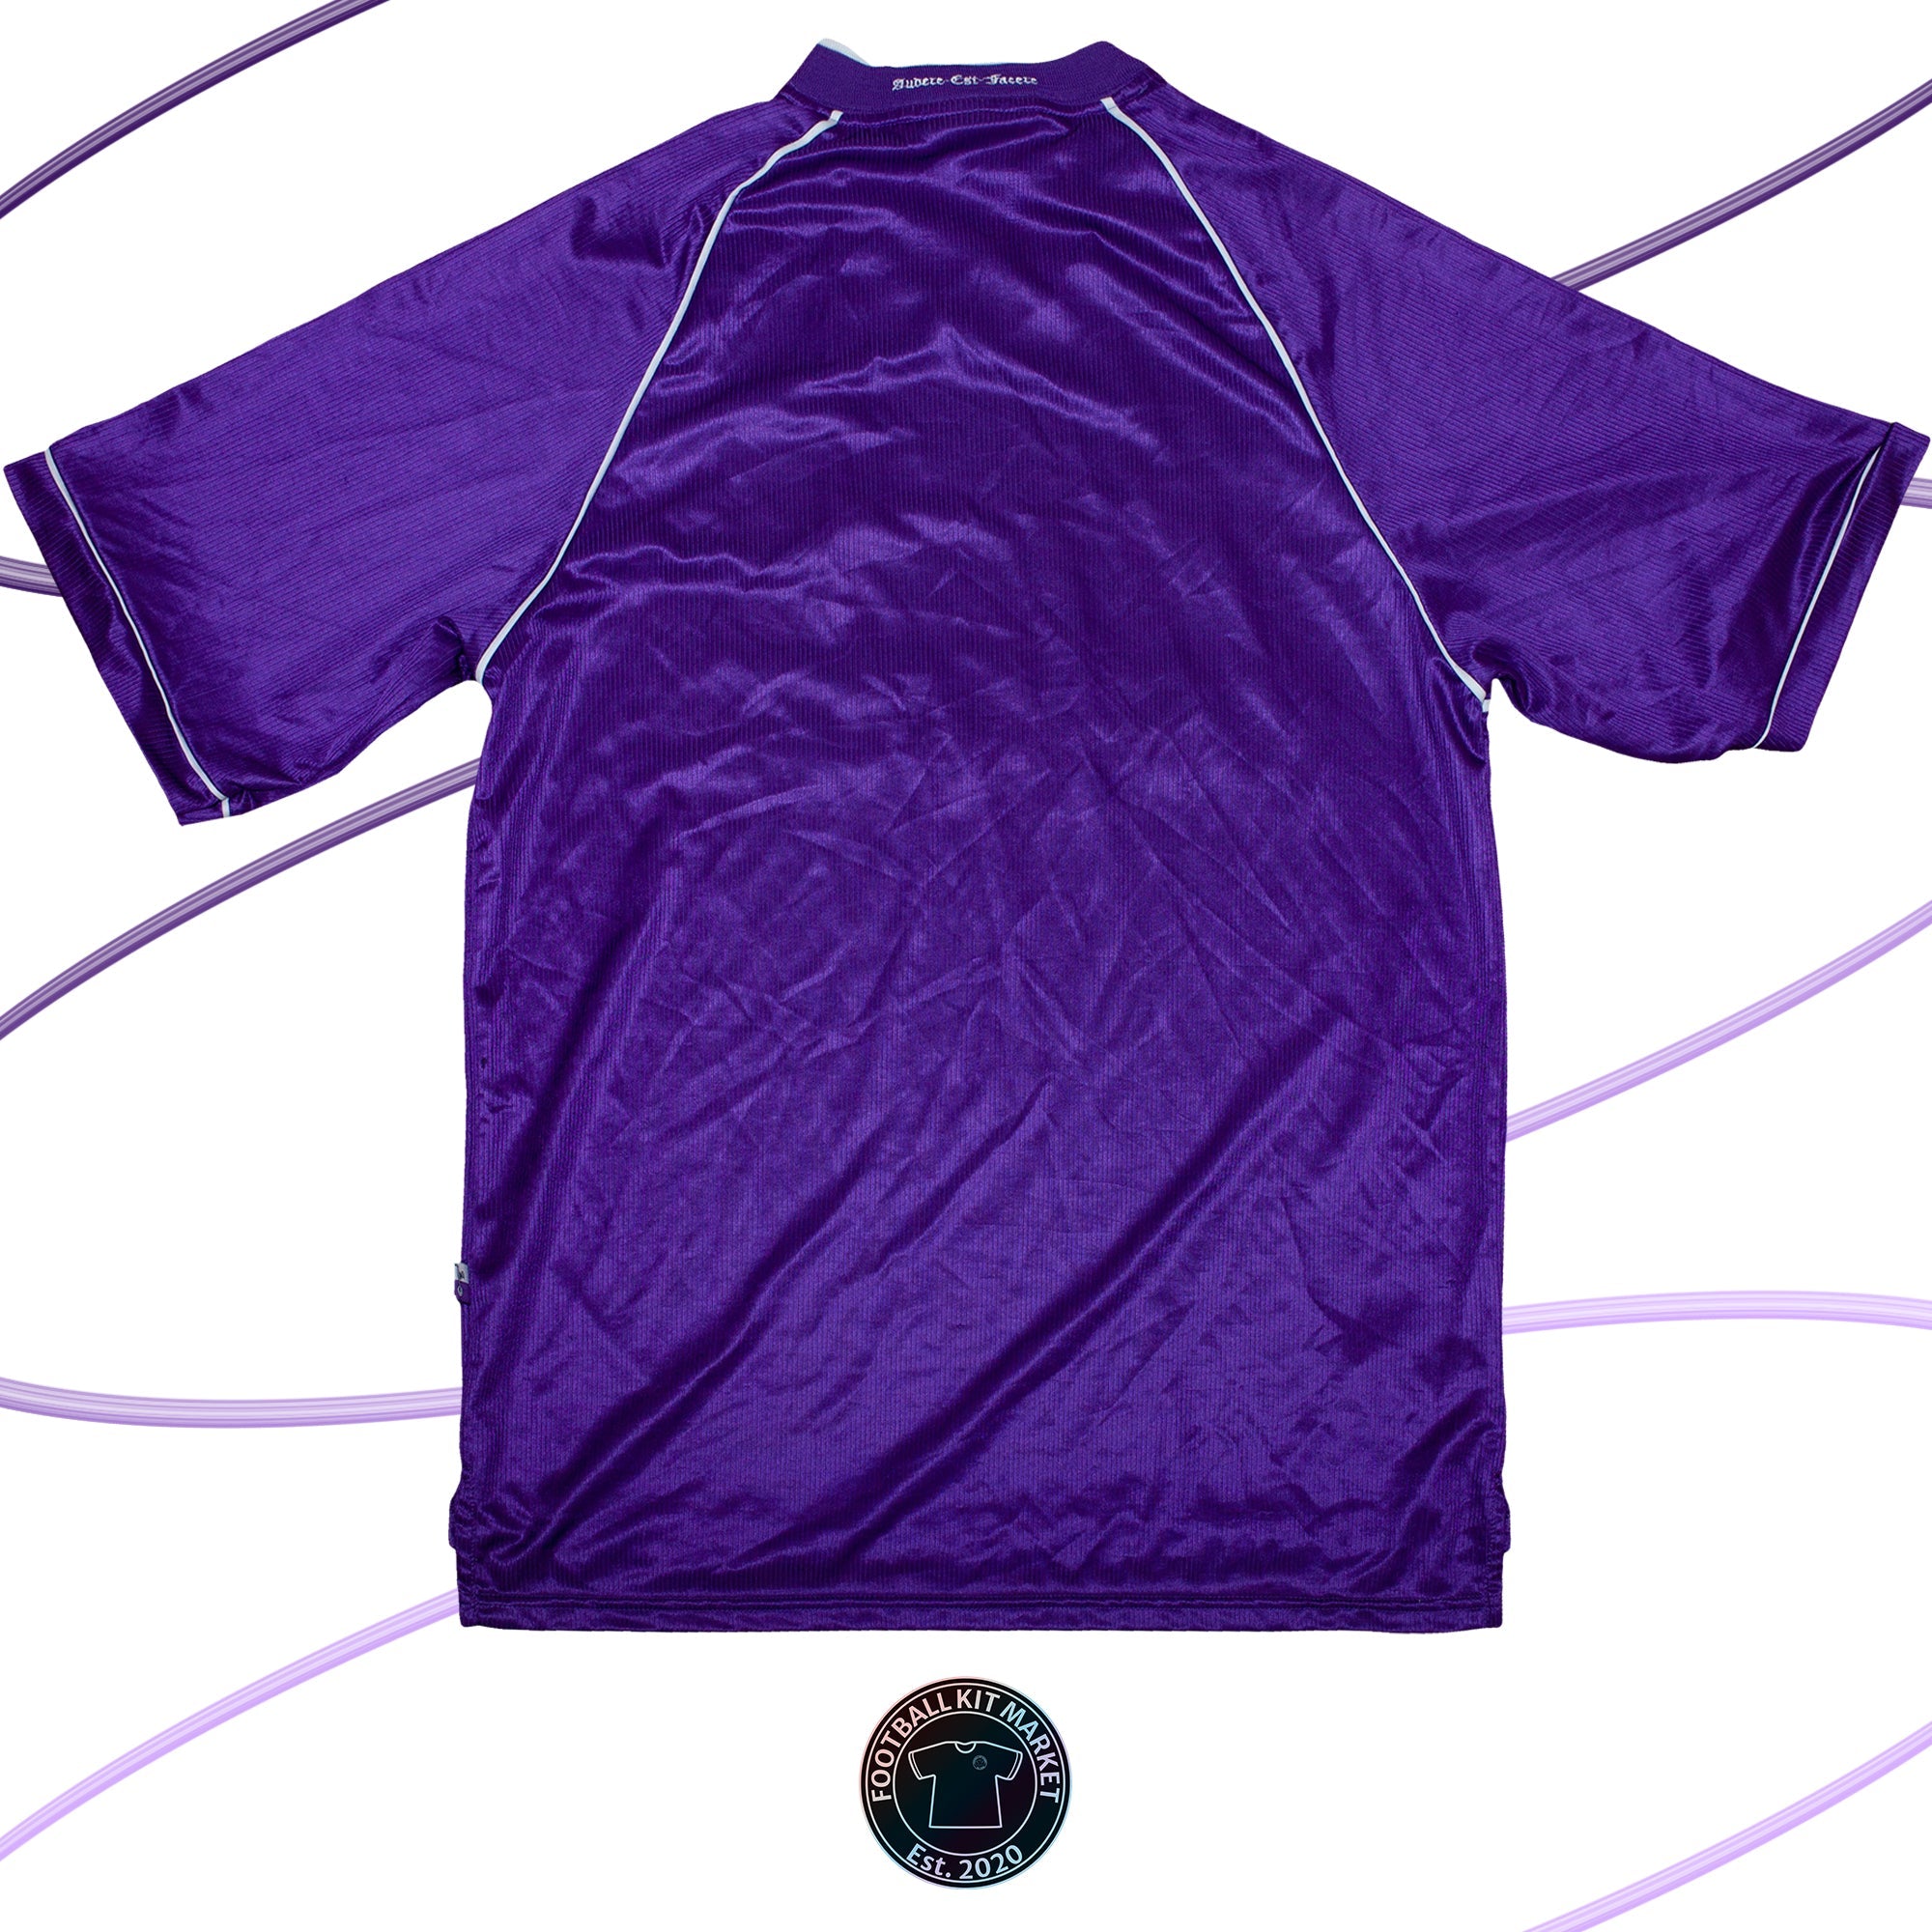 Genuine TOTTENHAM HOTSPUR Away Shirt (1998-1999) - PONY (L) - Product Image from Football Kit Market